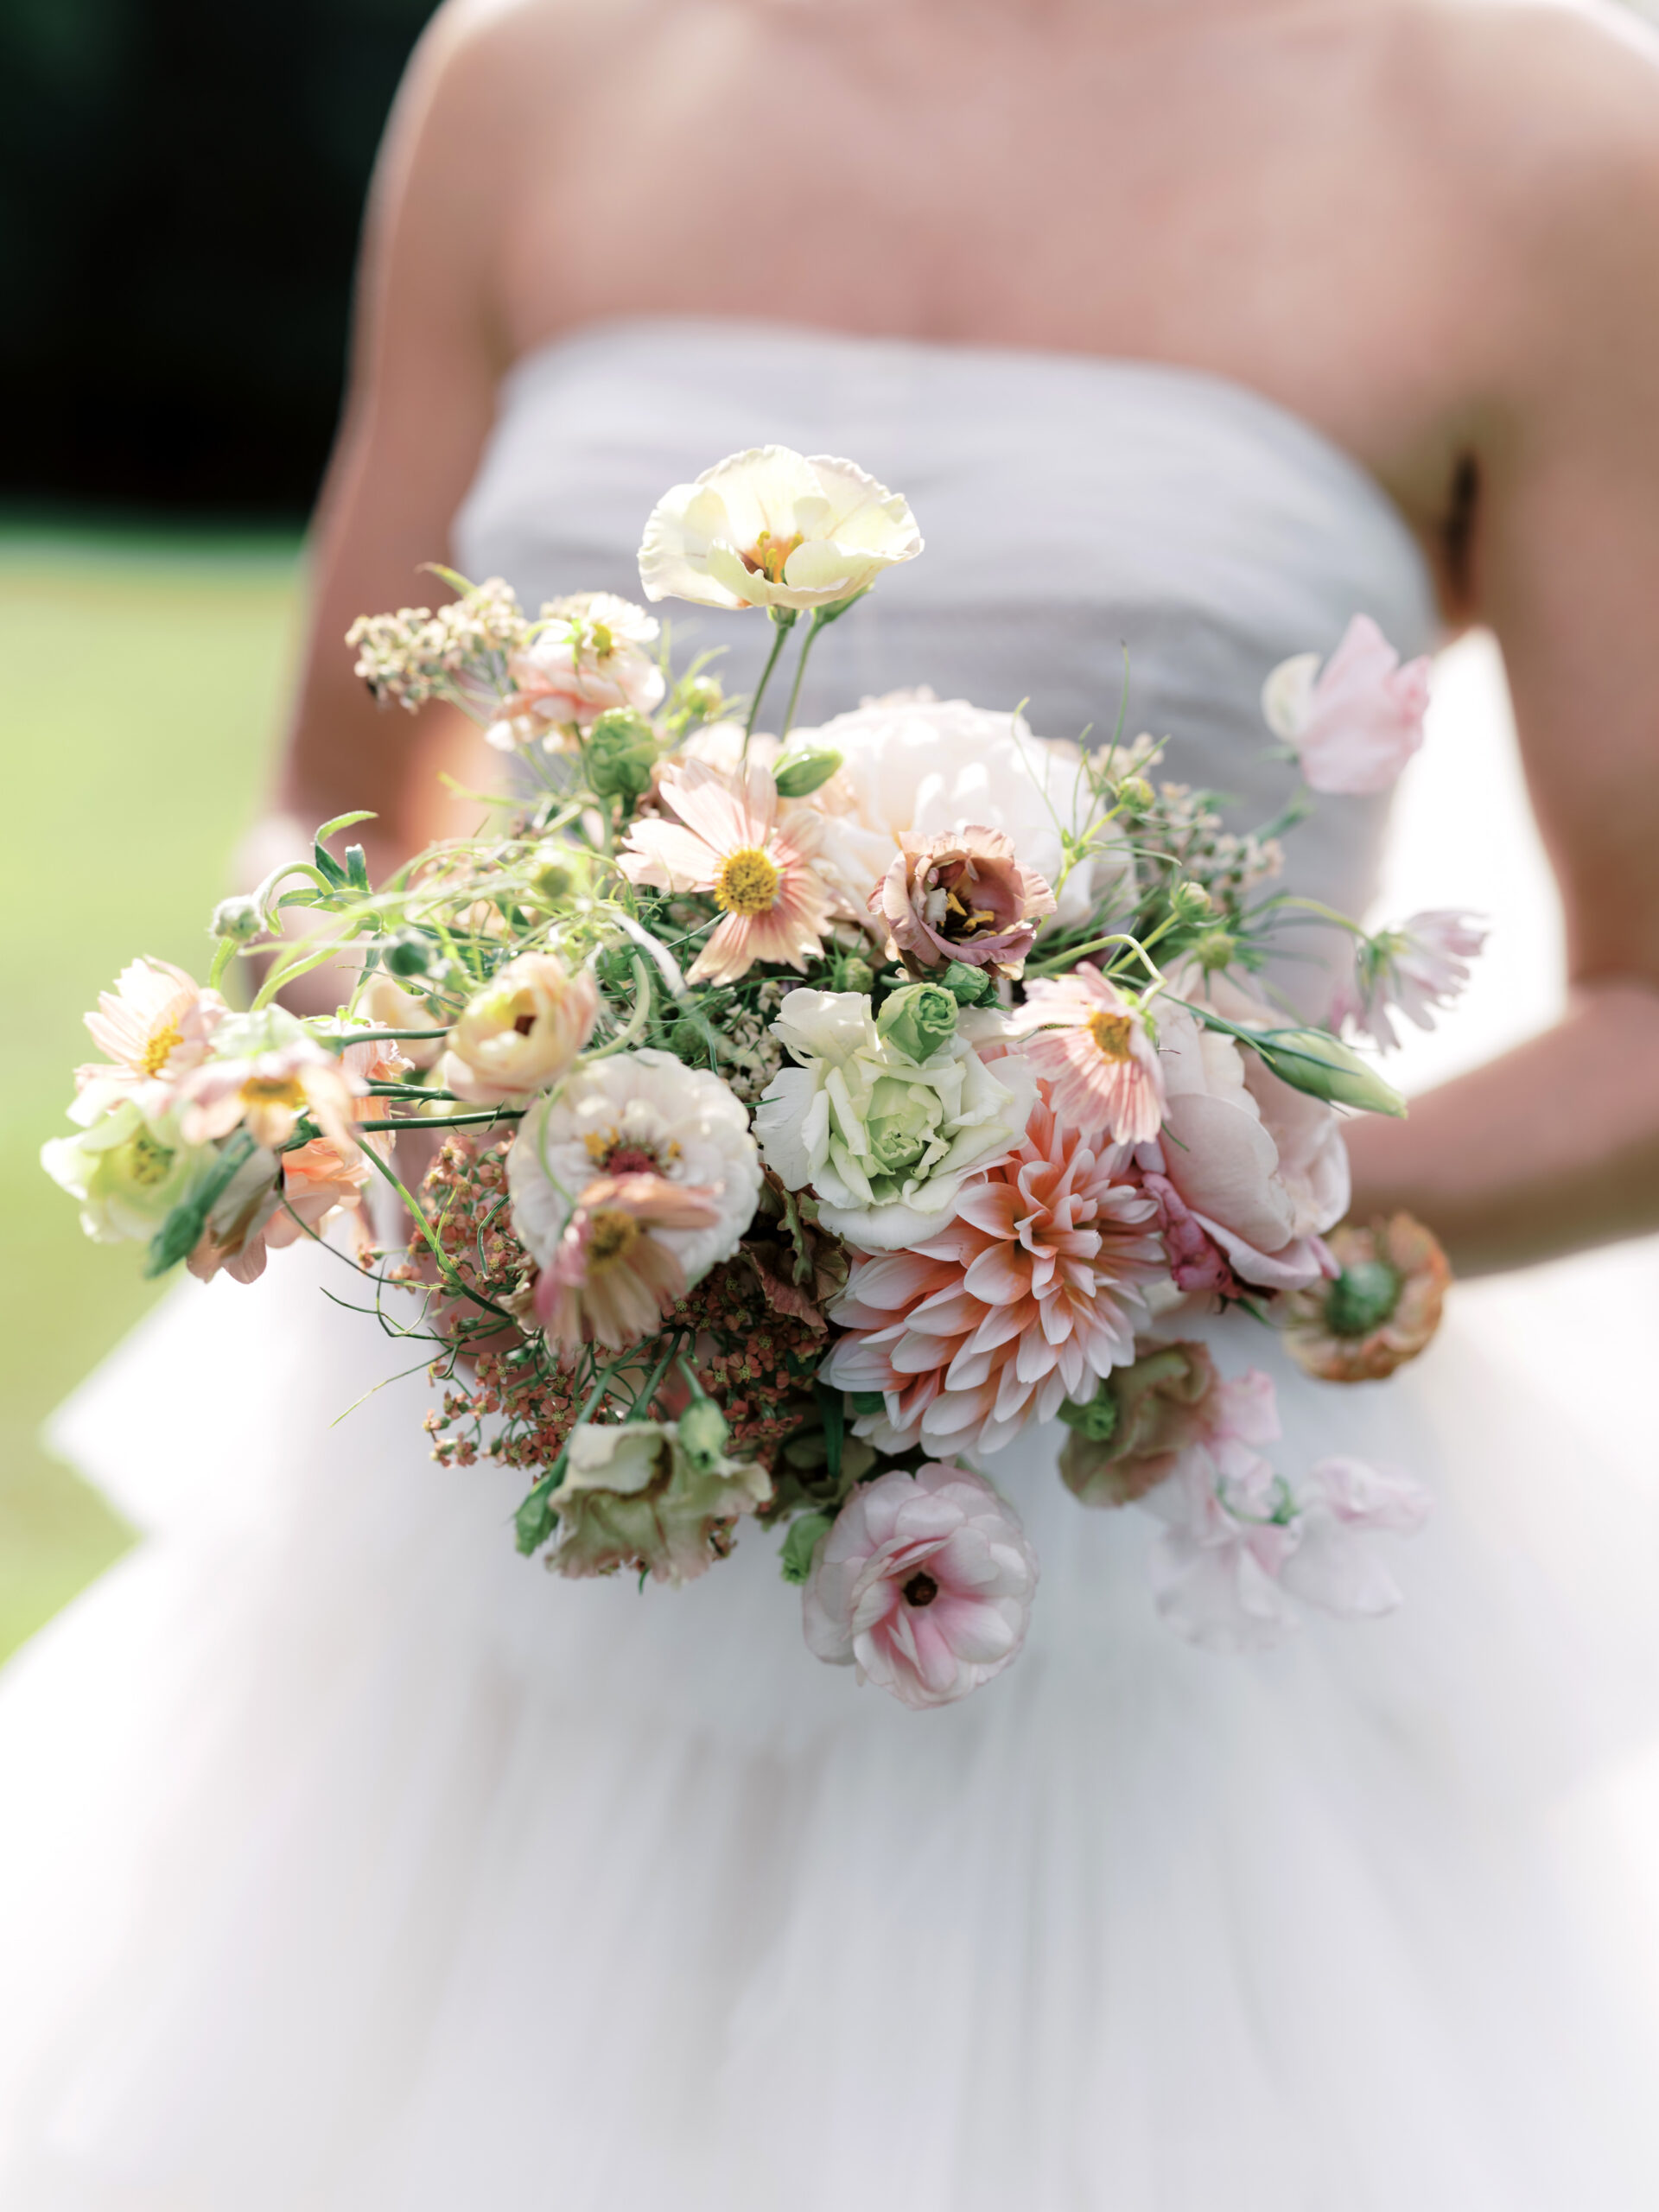 The bride's beautiful bouquet of flowers. Upstate New York luxury wedding image by Jenny Fu Studio.